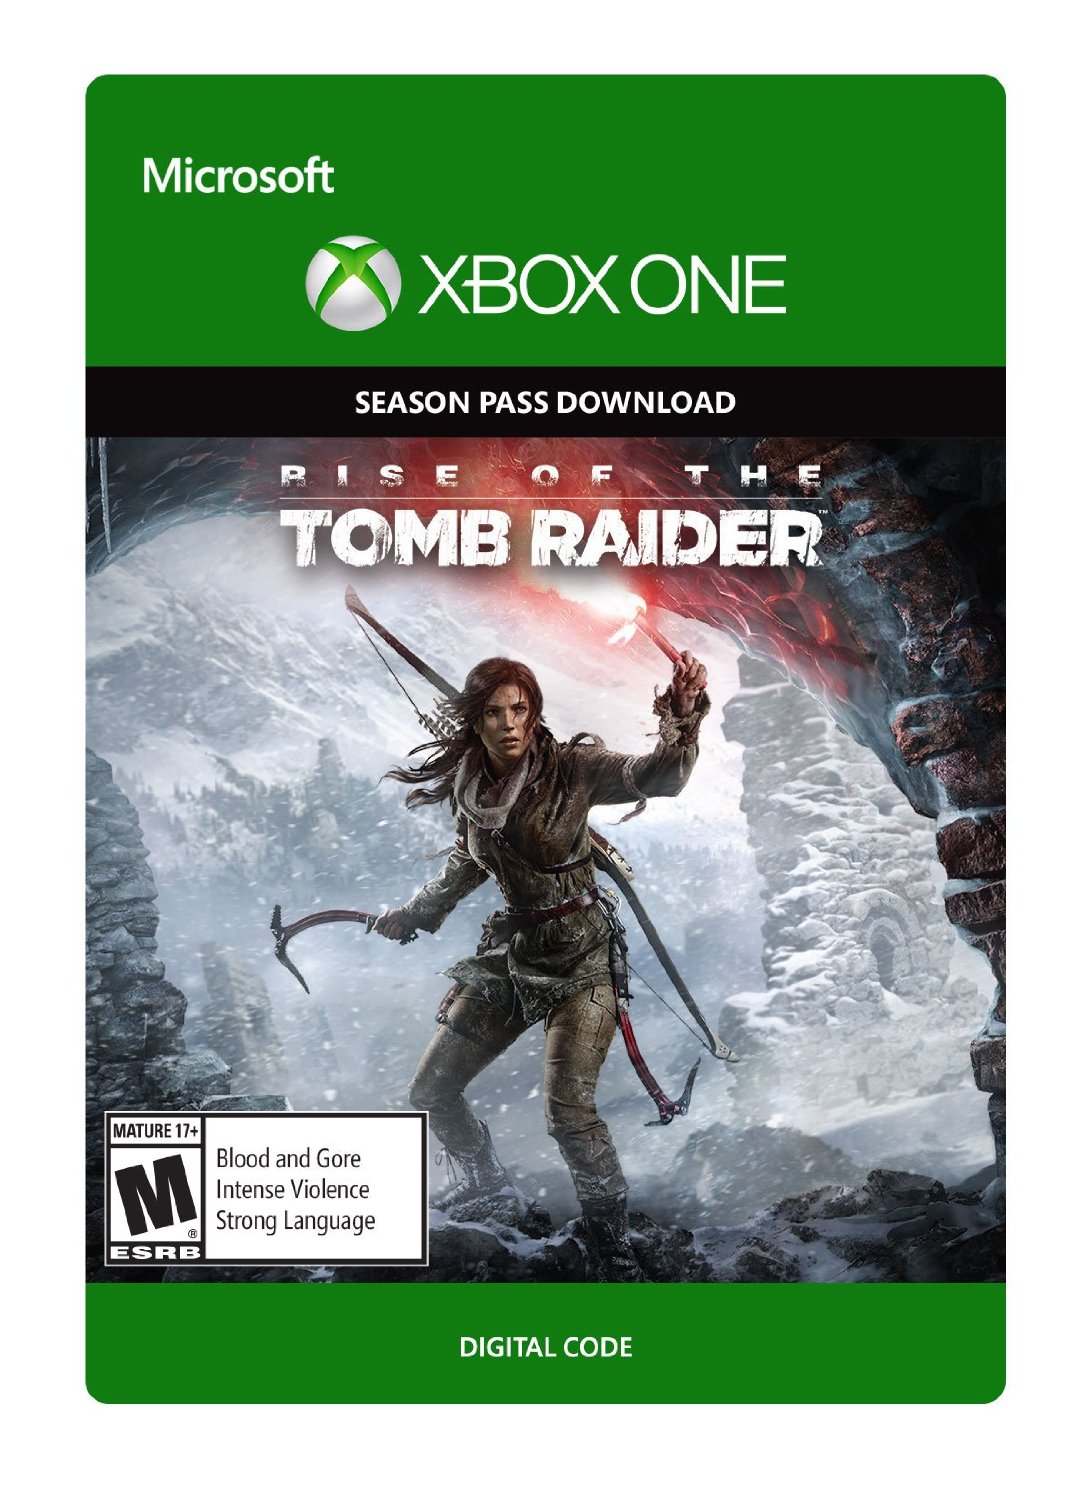 Rise of the Tomb Raider season pass